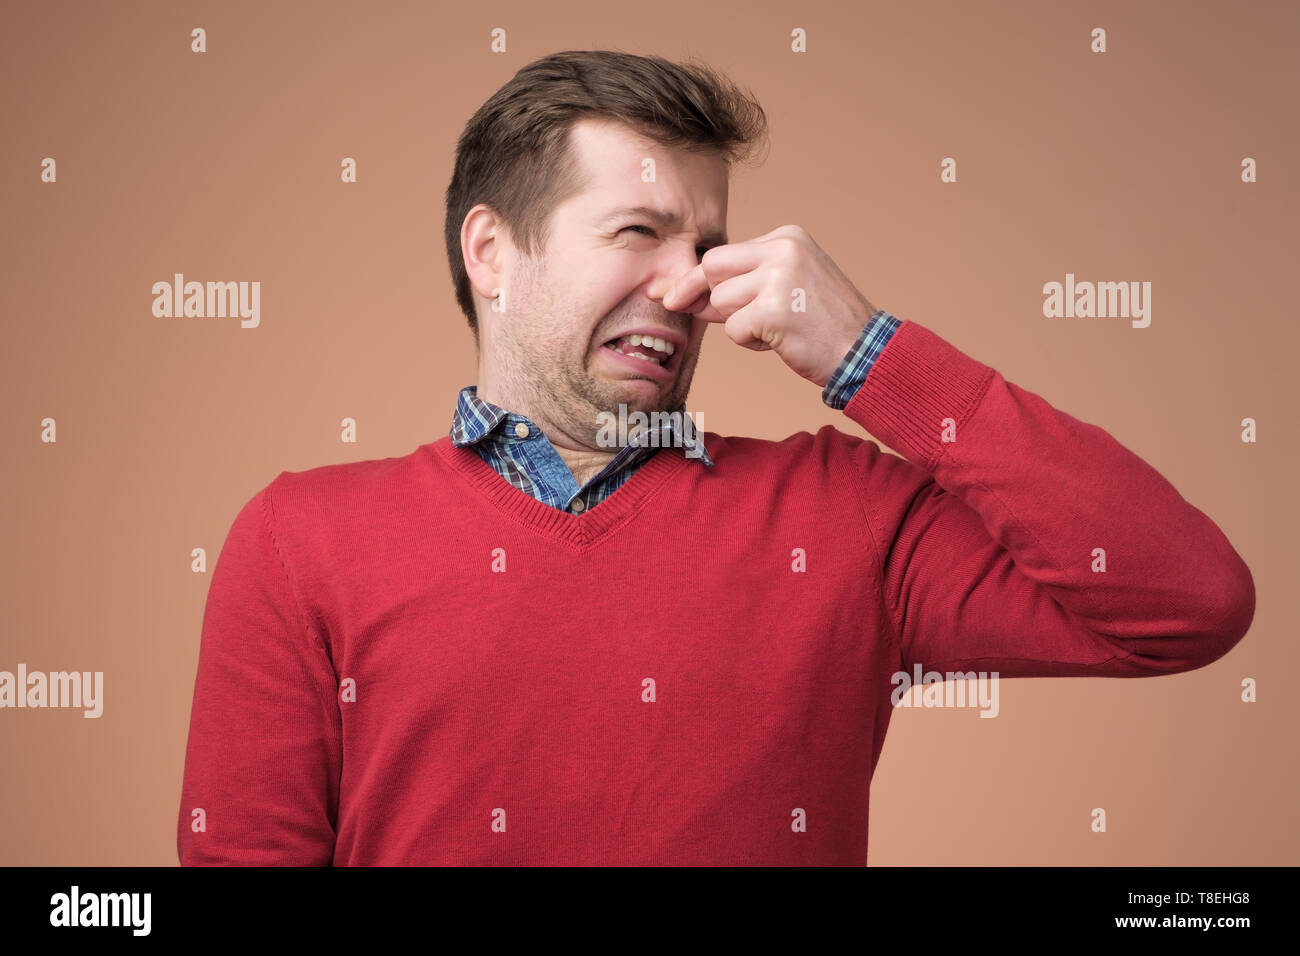 Man plugs nose as smells something stink Stock Photo